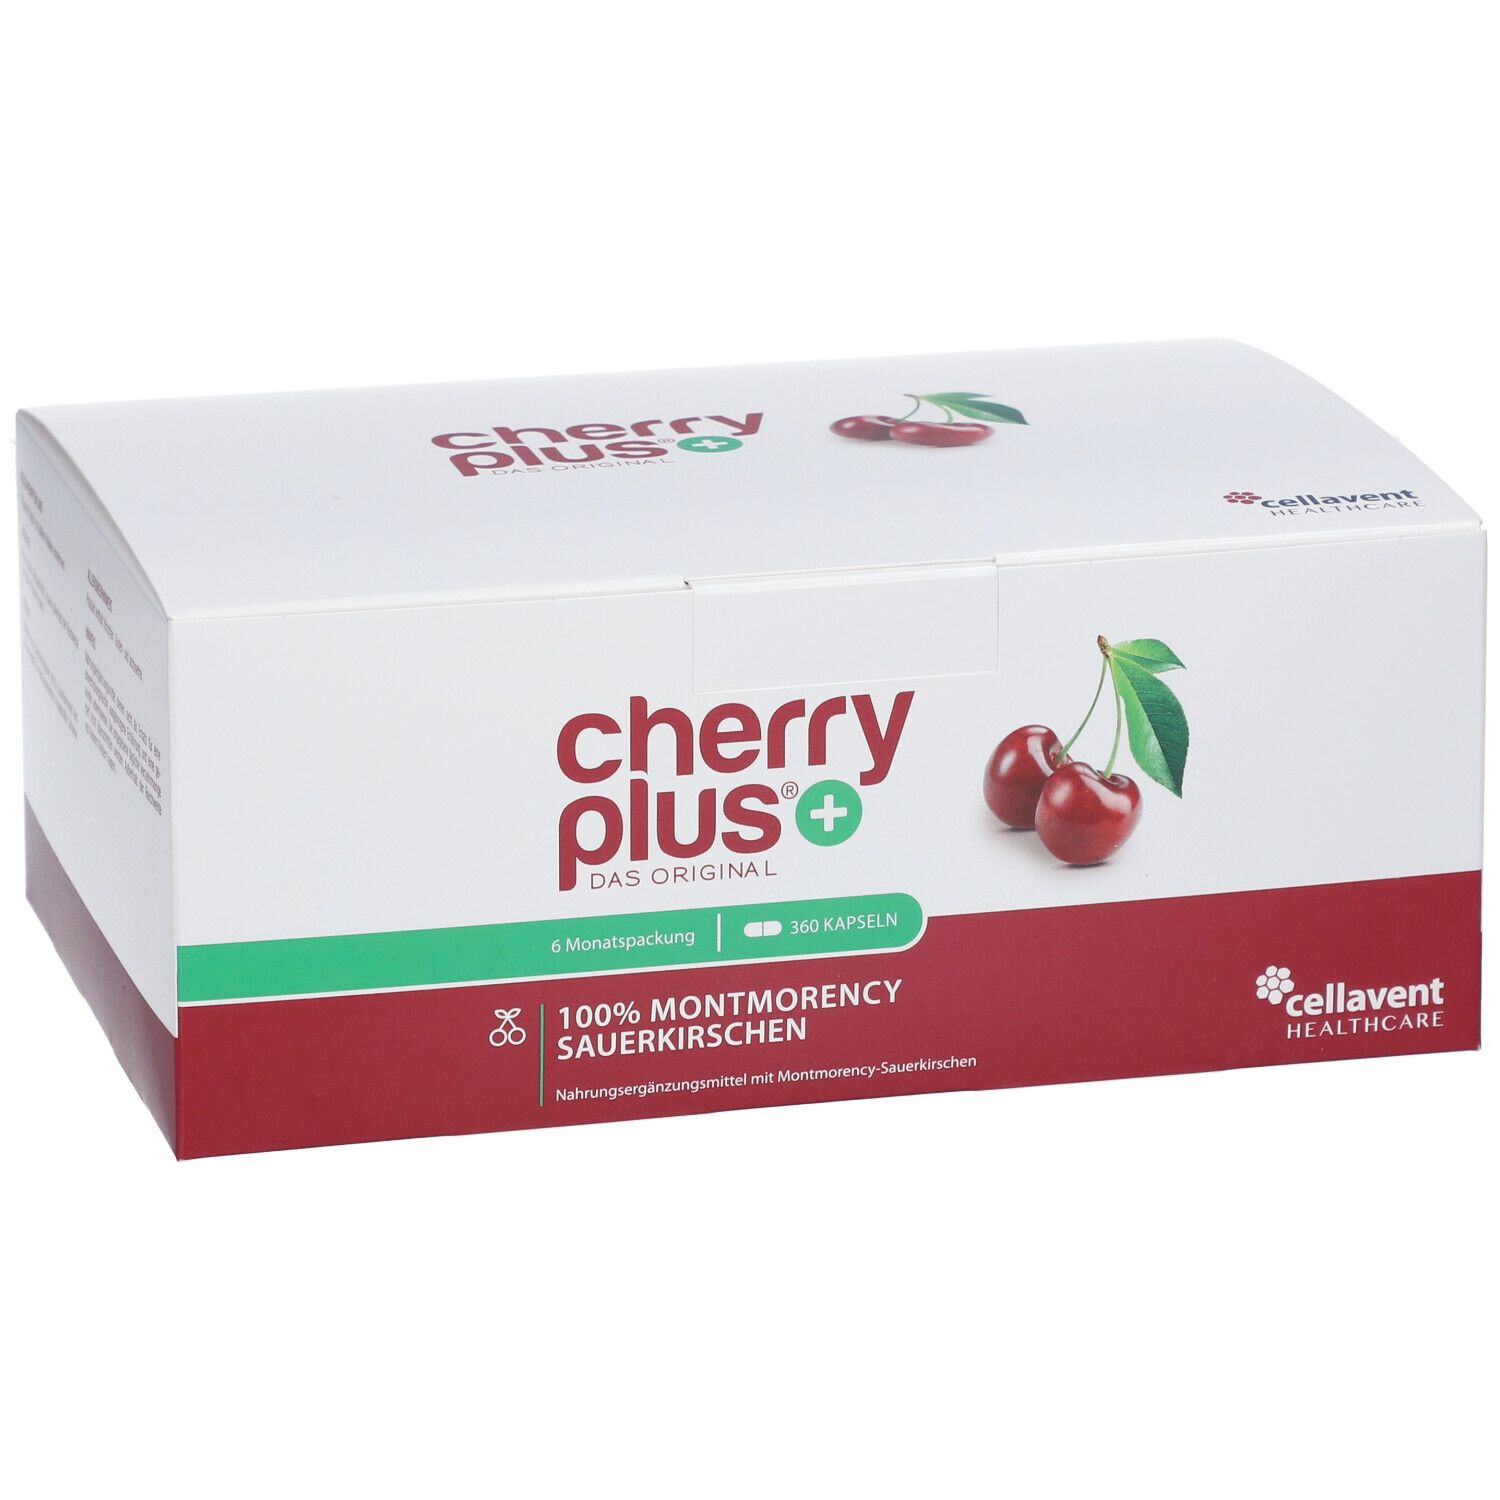 CHERRY PLUS® - Capsules de cerises acides Montmorency